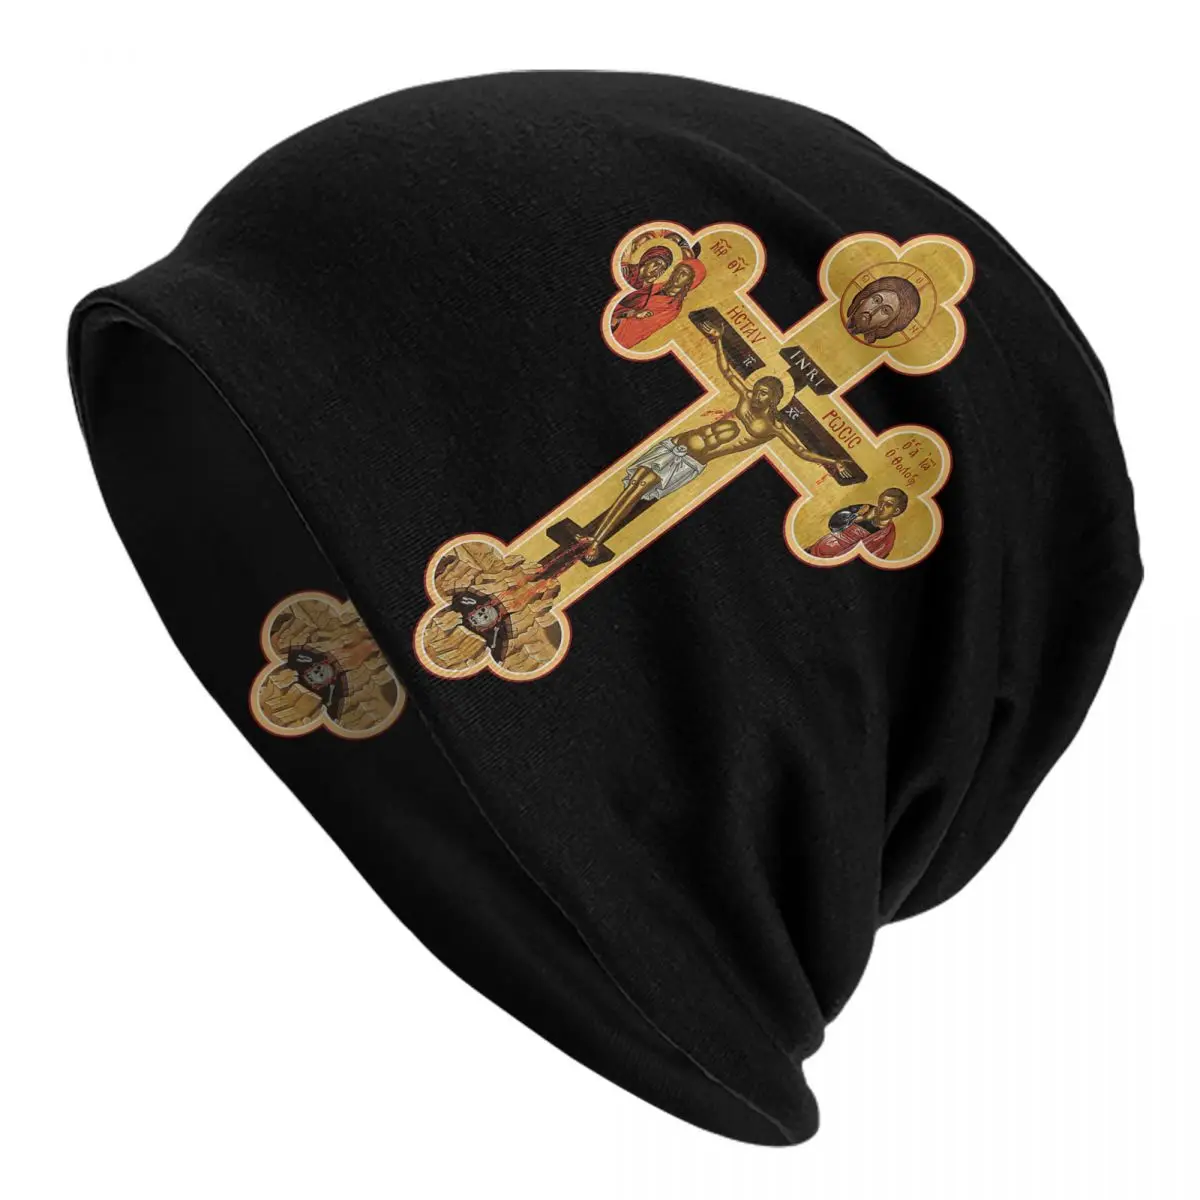 Orthodox Cross Adult Men's Women's Knit Hat Keep warm winter Funny knitted hat